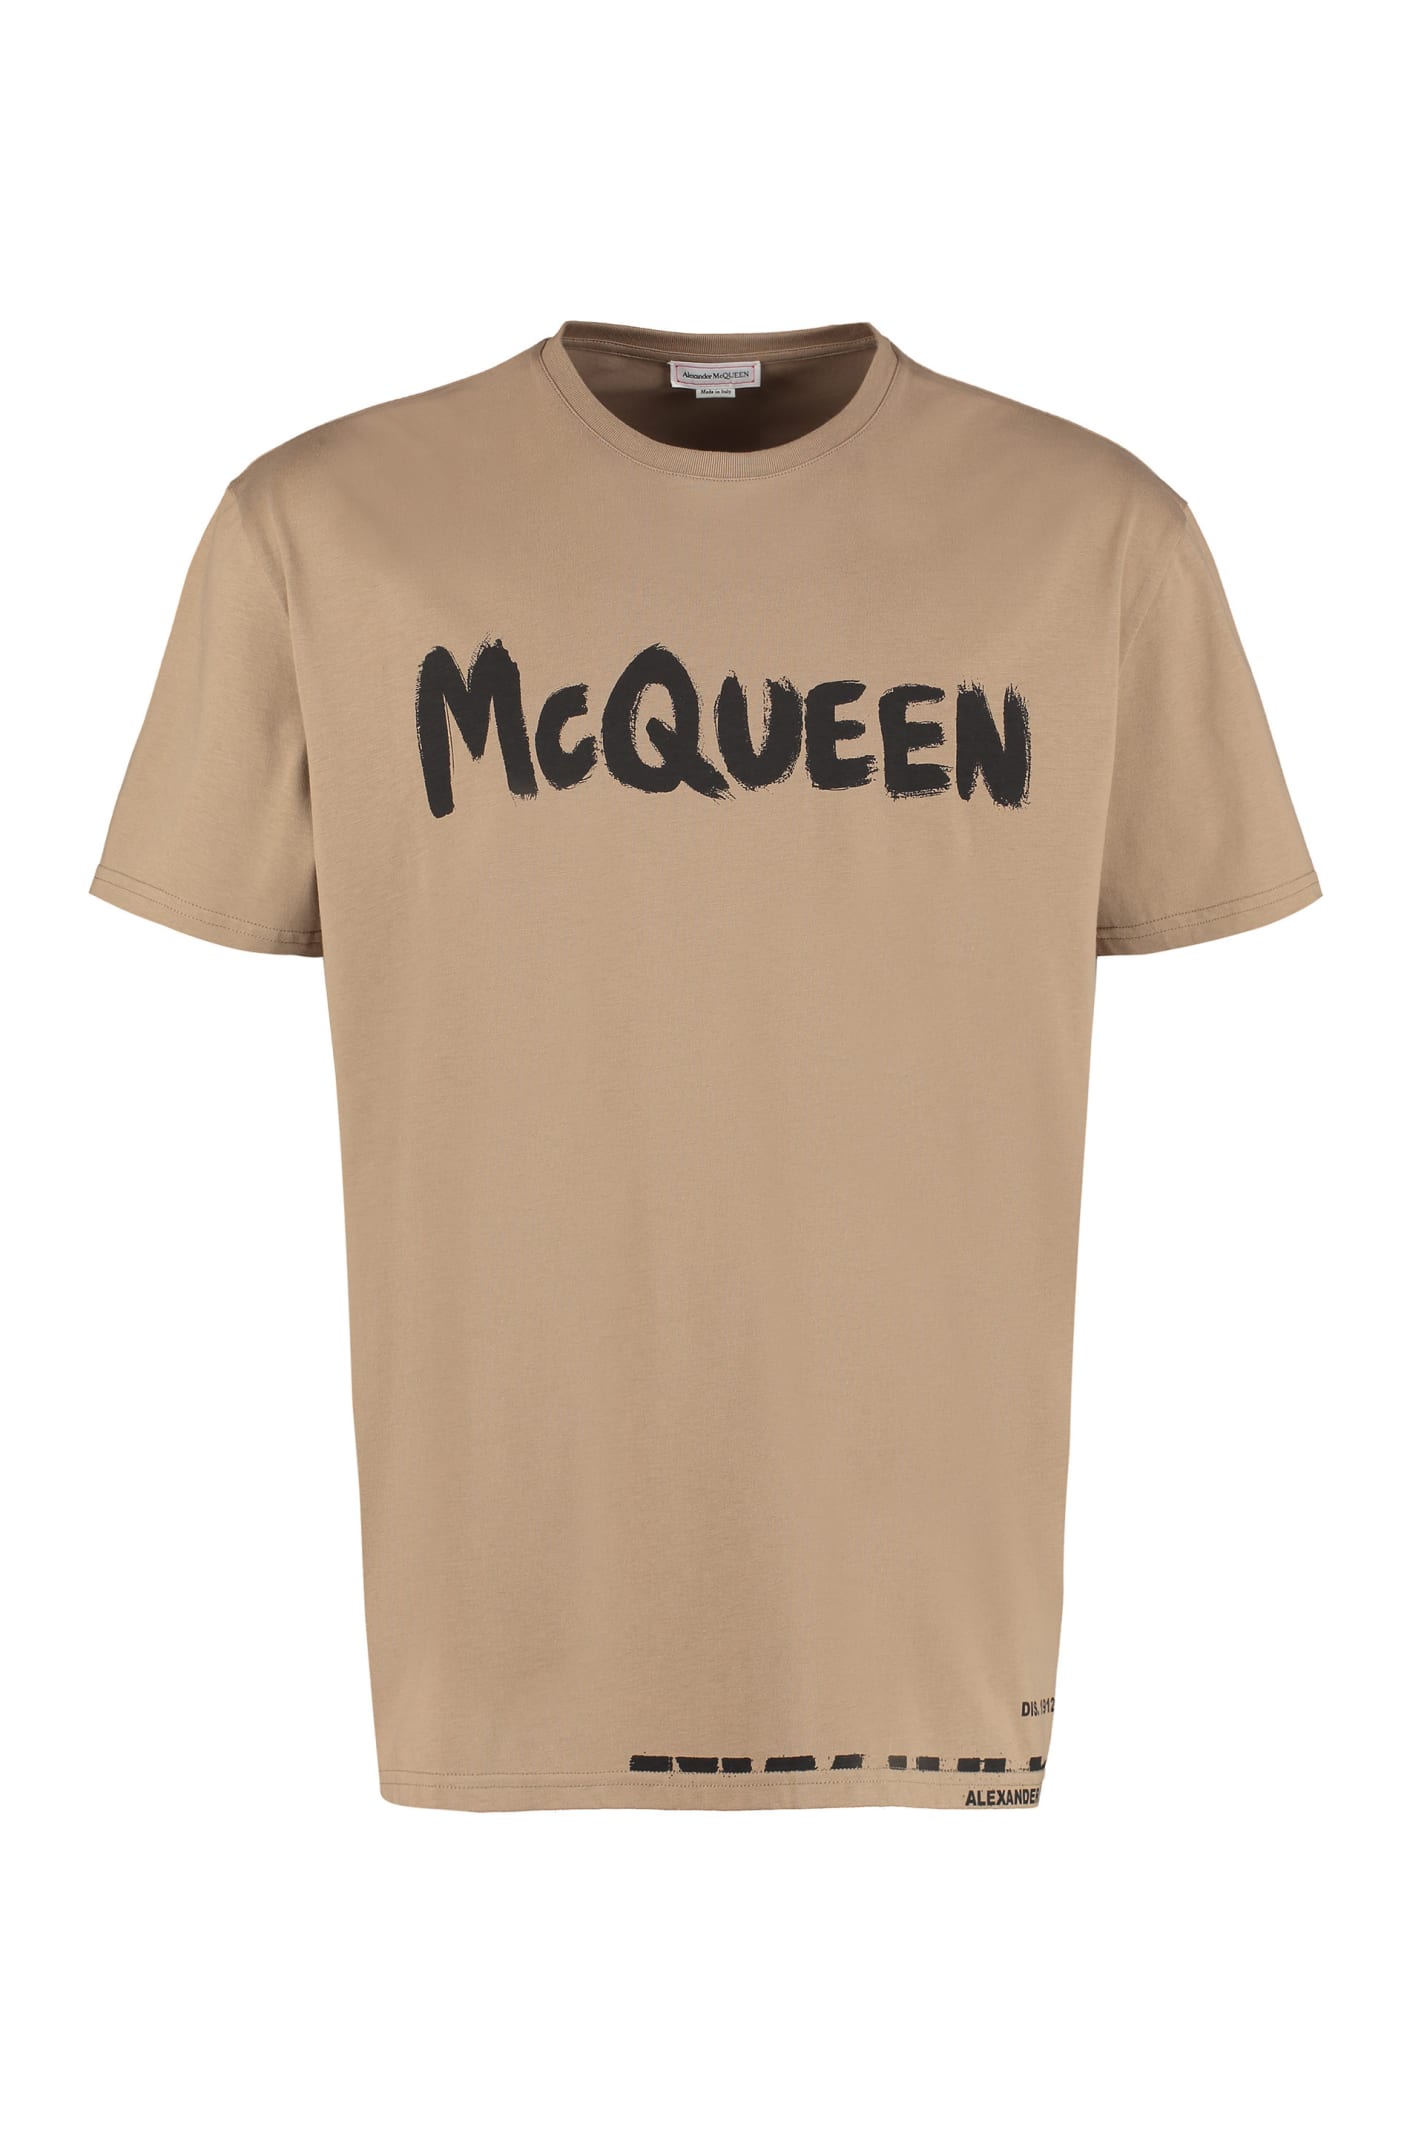 Alexander McQueen Cotton Crew-neck T-shirt